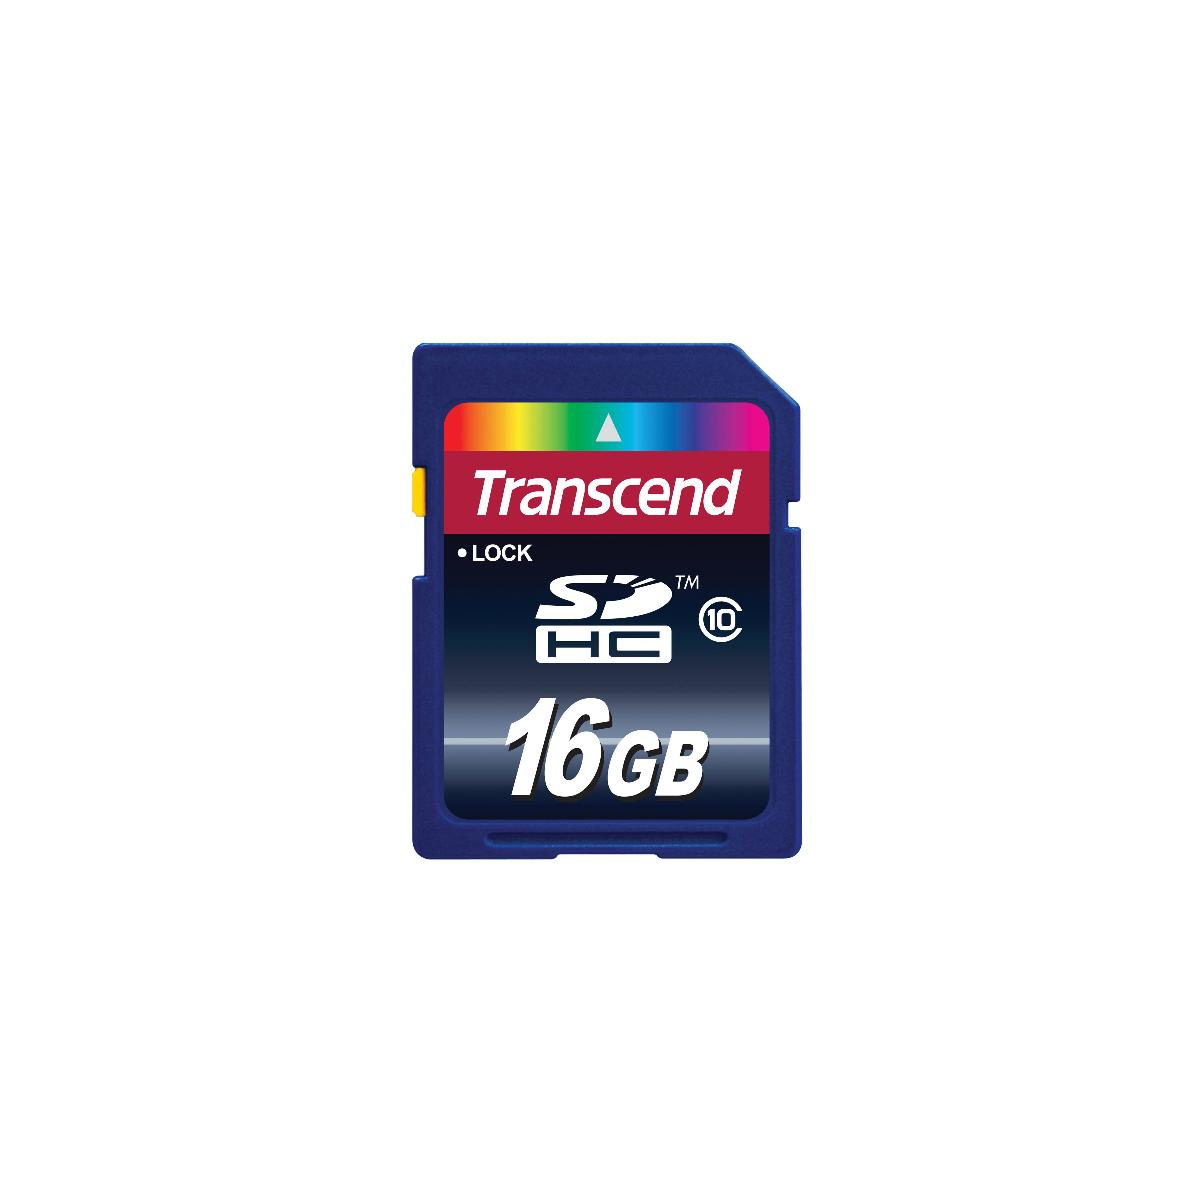 TRANSCEND TS16GSDHC10, SDHC 20 MB/s Speicherkarte, 16 GB